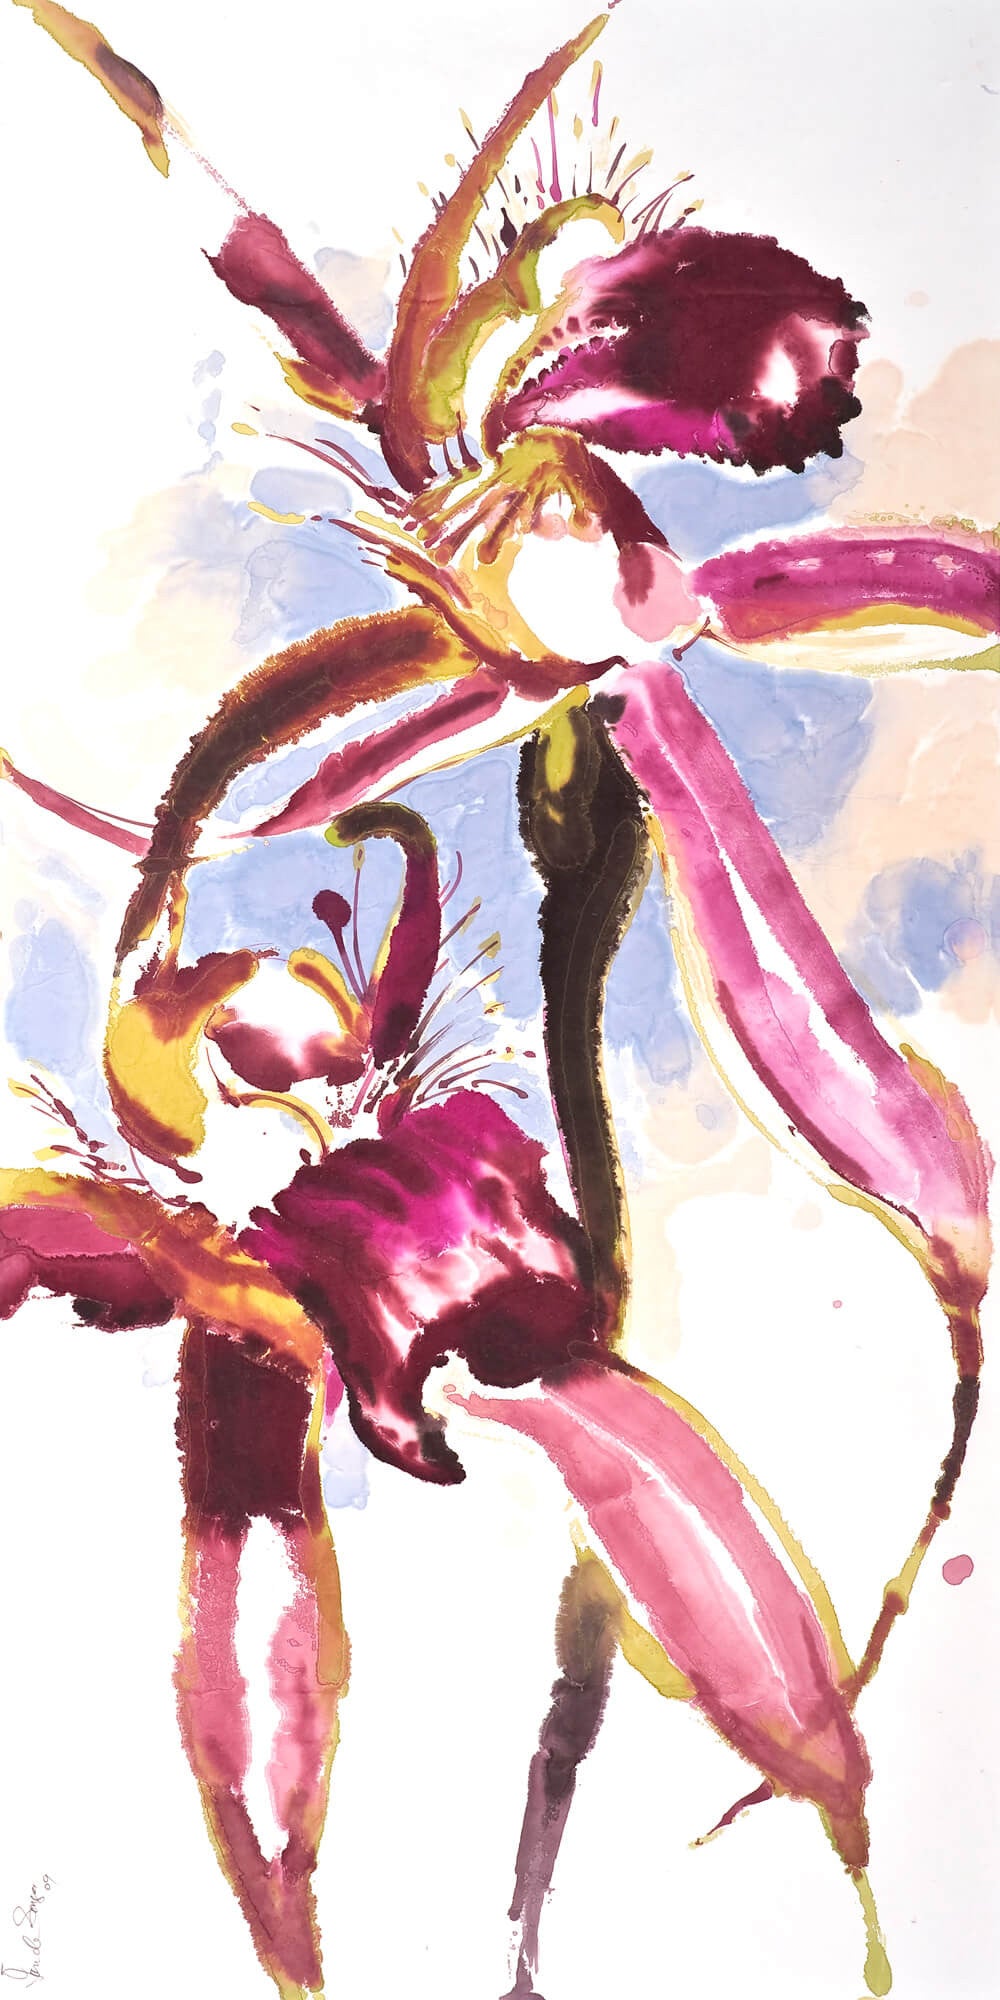 Caladenia brownii: Limited Edition Print